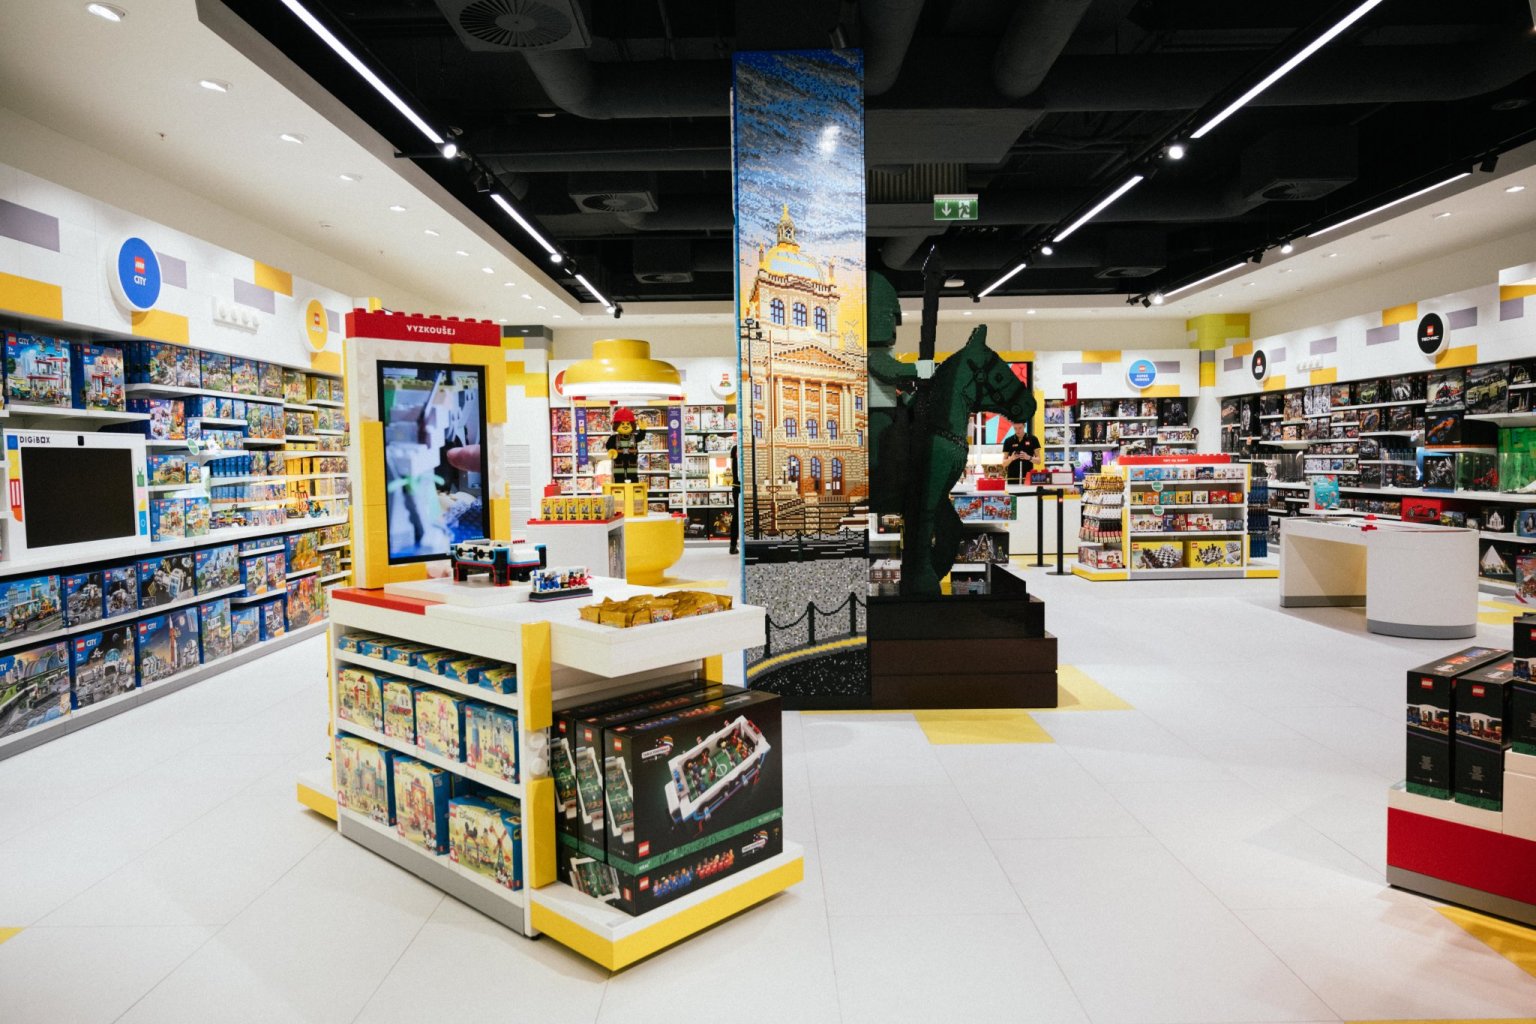 Lego Store v nkupnm centru Westfield Chodov